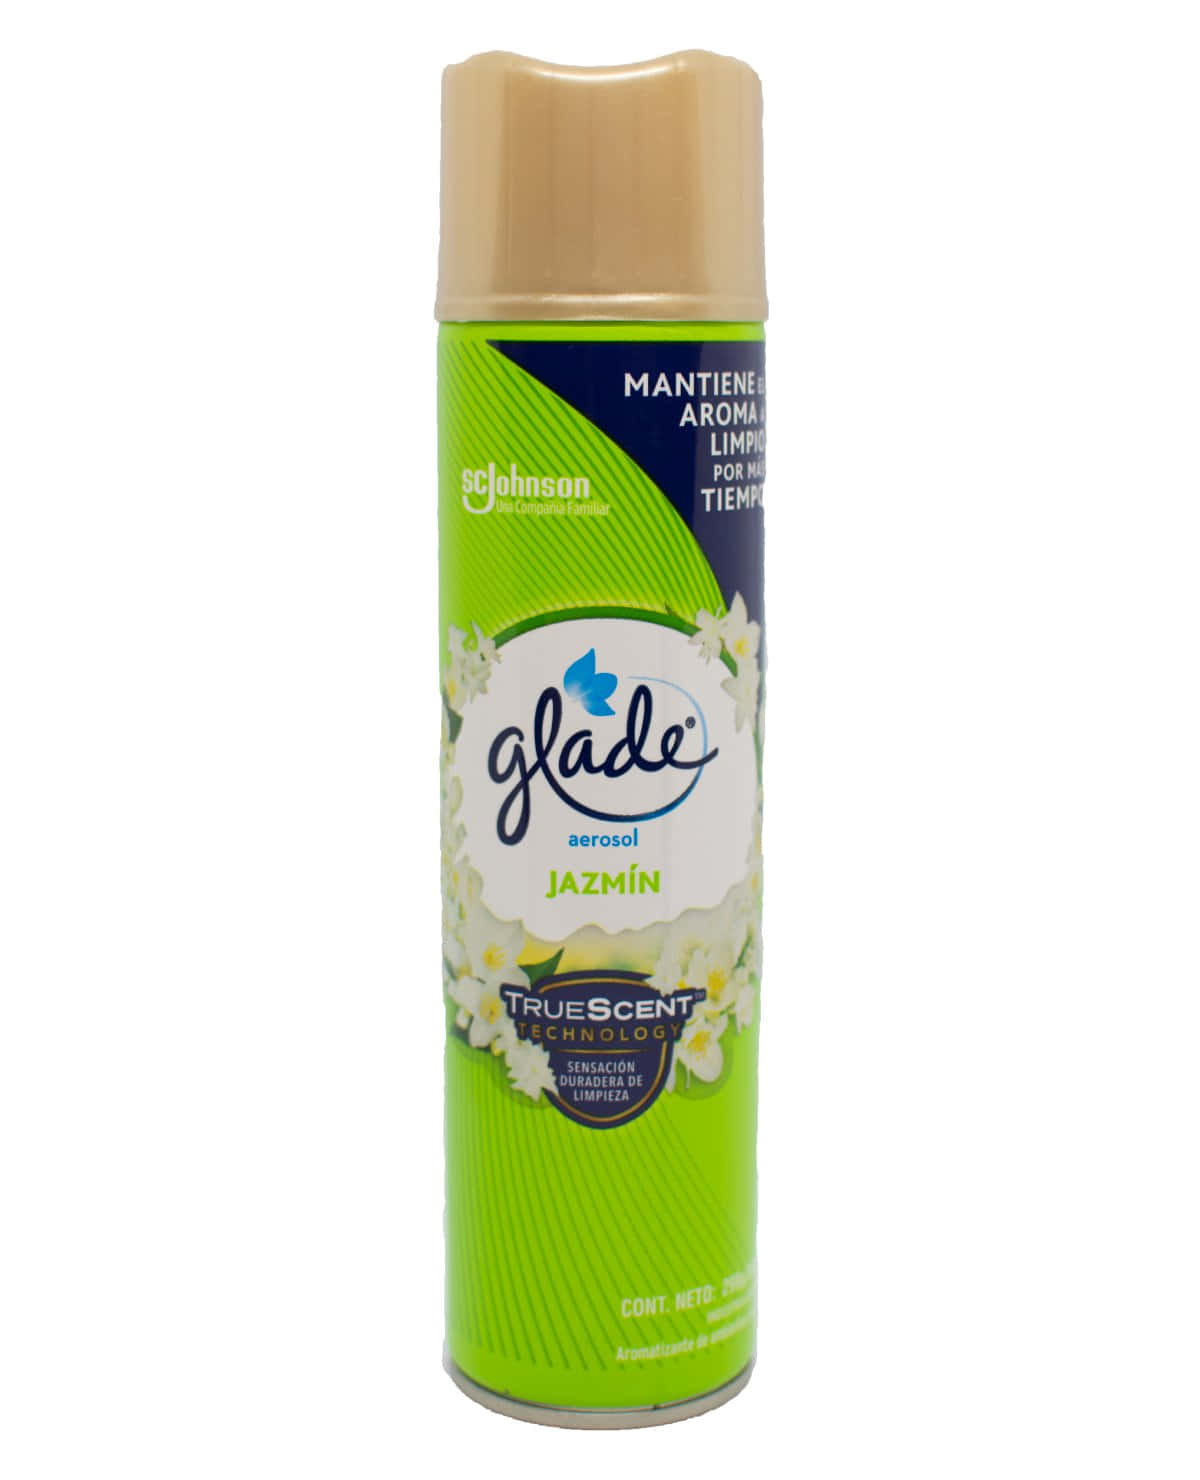 Desodorante Glade Jazmin 360 Cm3